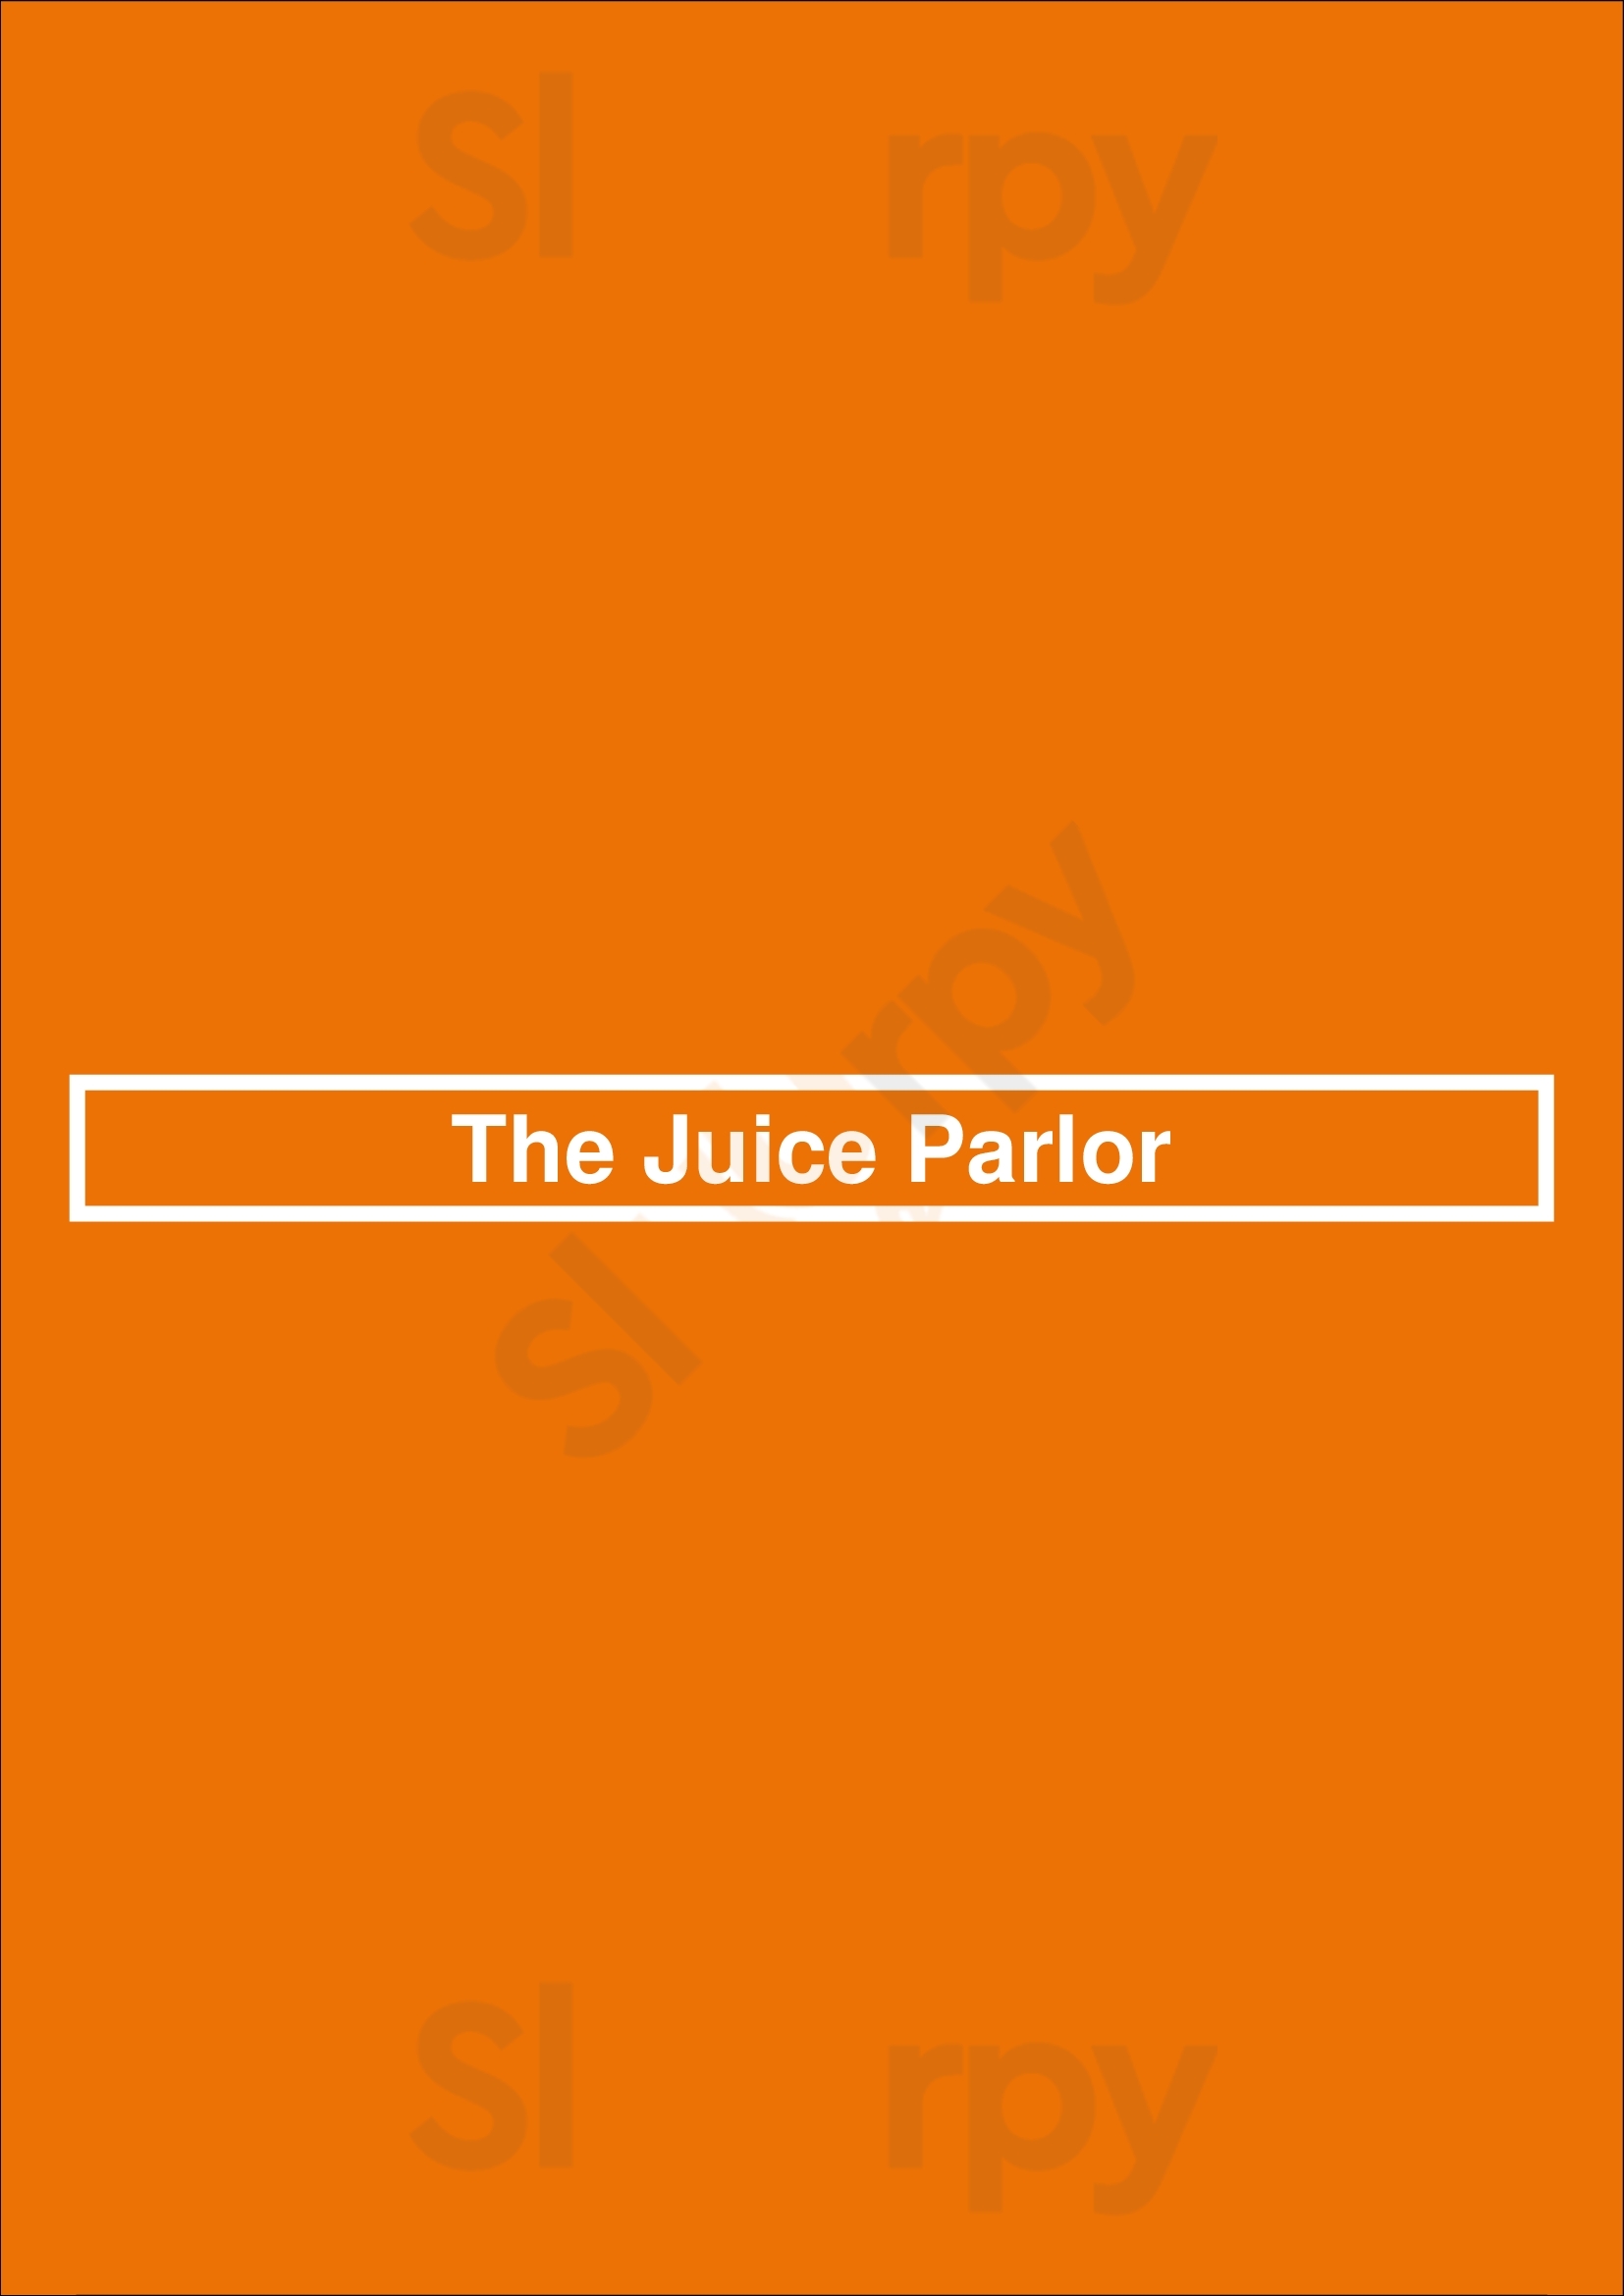 The Juice Parlor Los Angeles Menu - 1